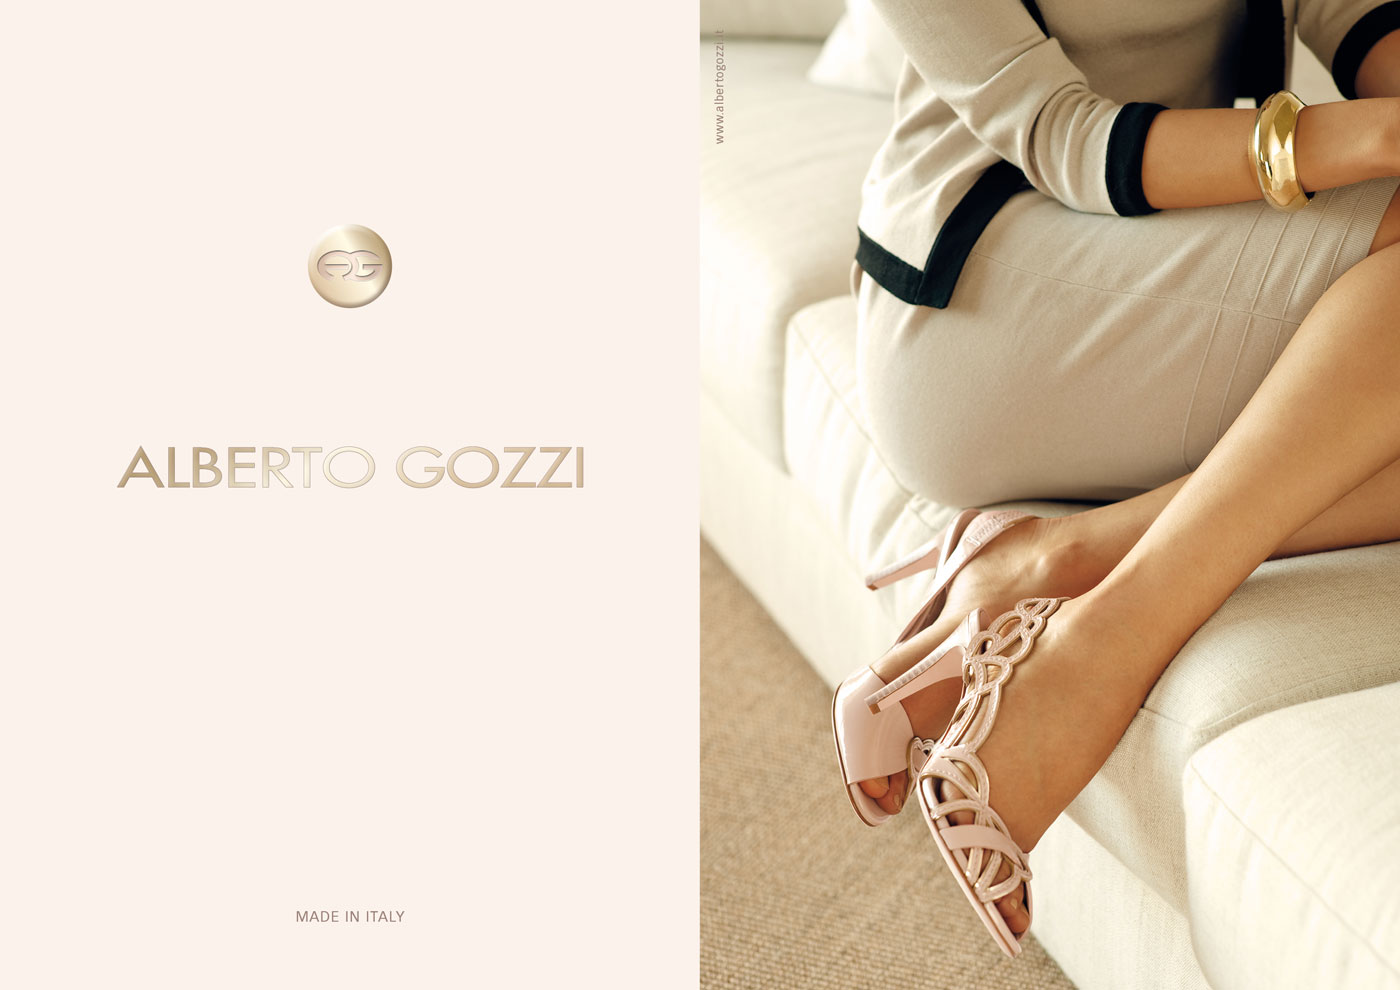 Advertising: ALBERTO GOZZI